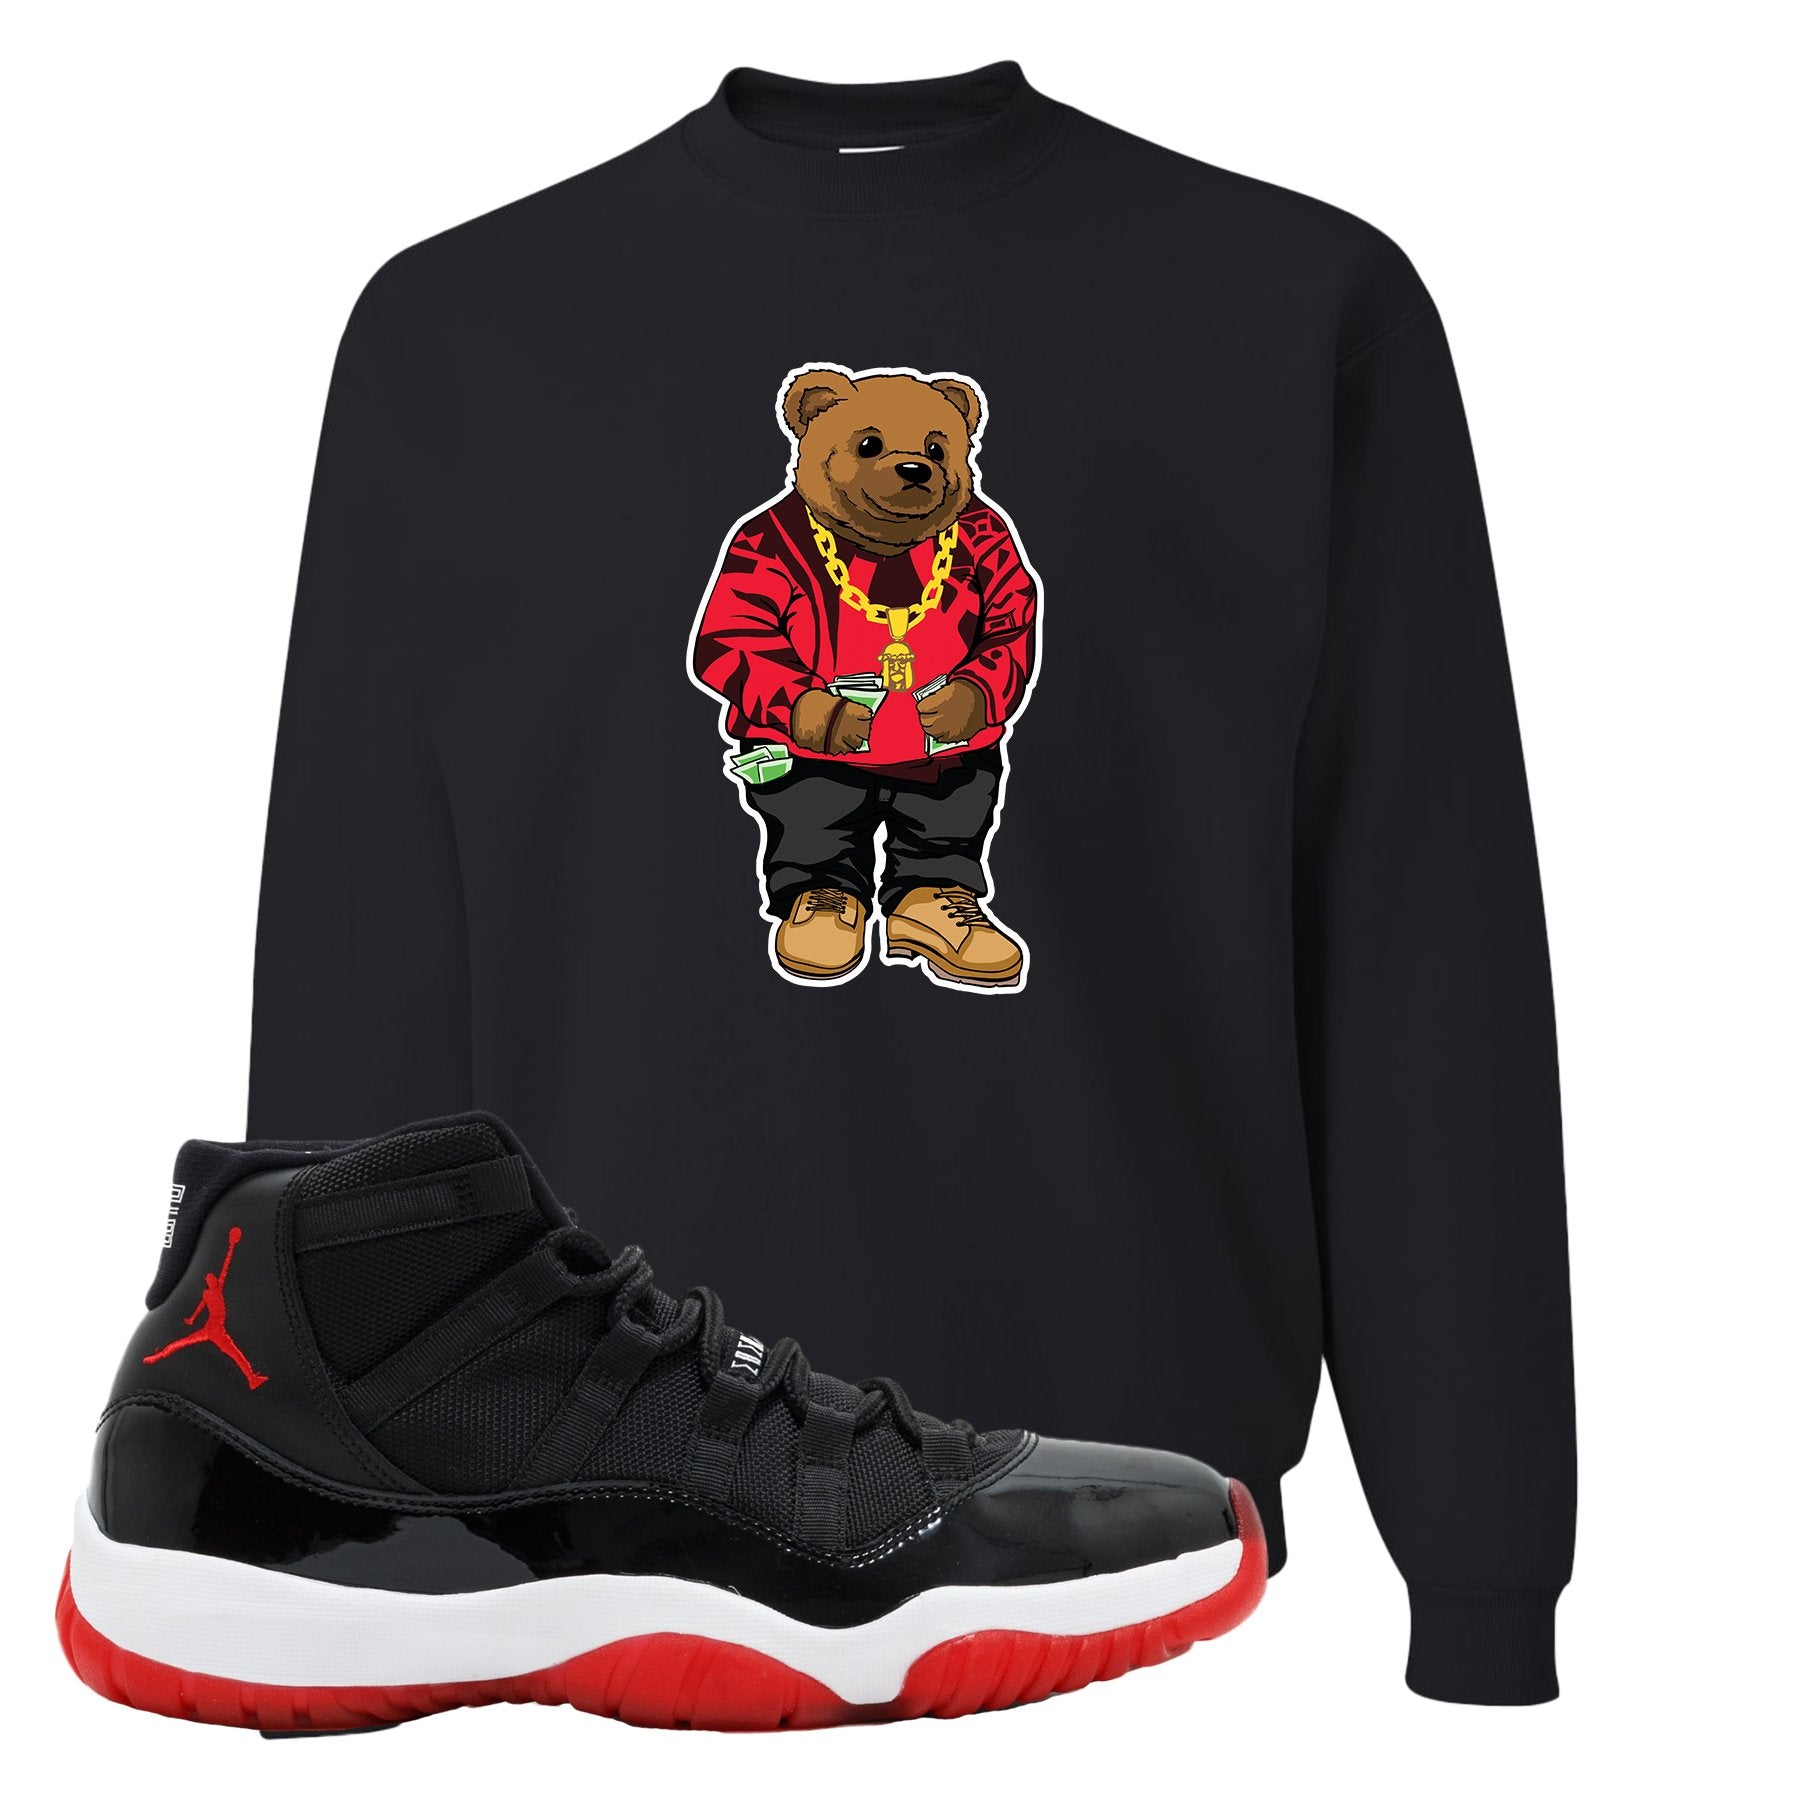 Jordan 11 Bred Sweater Bear Black Sneaker Hook Up Crewneck Sweatshirt